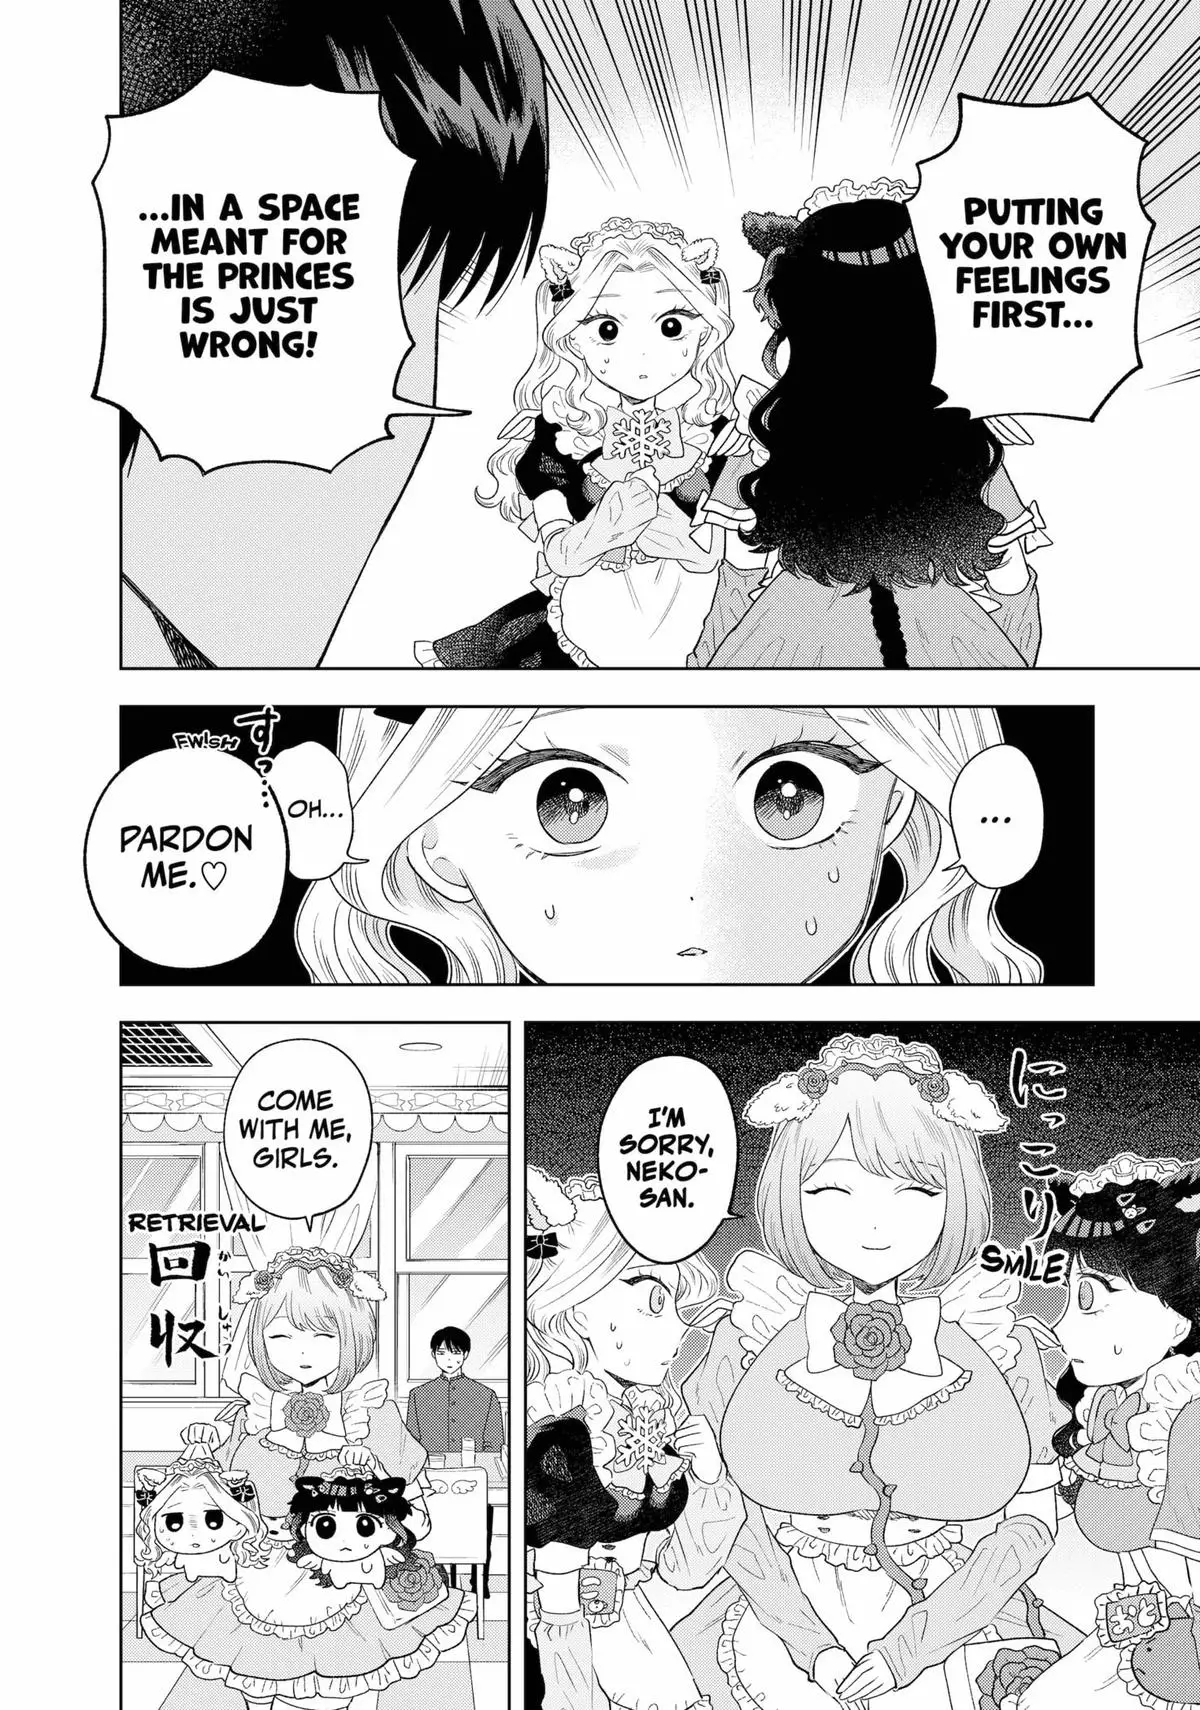 Tsuruko Returns The Favor - 8 page 12-f9cadfa3